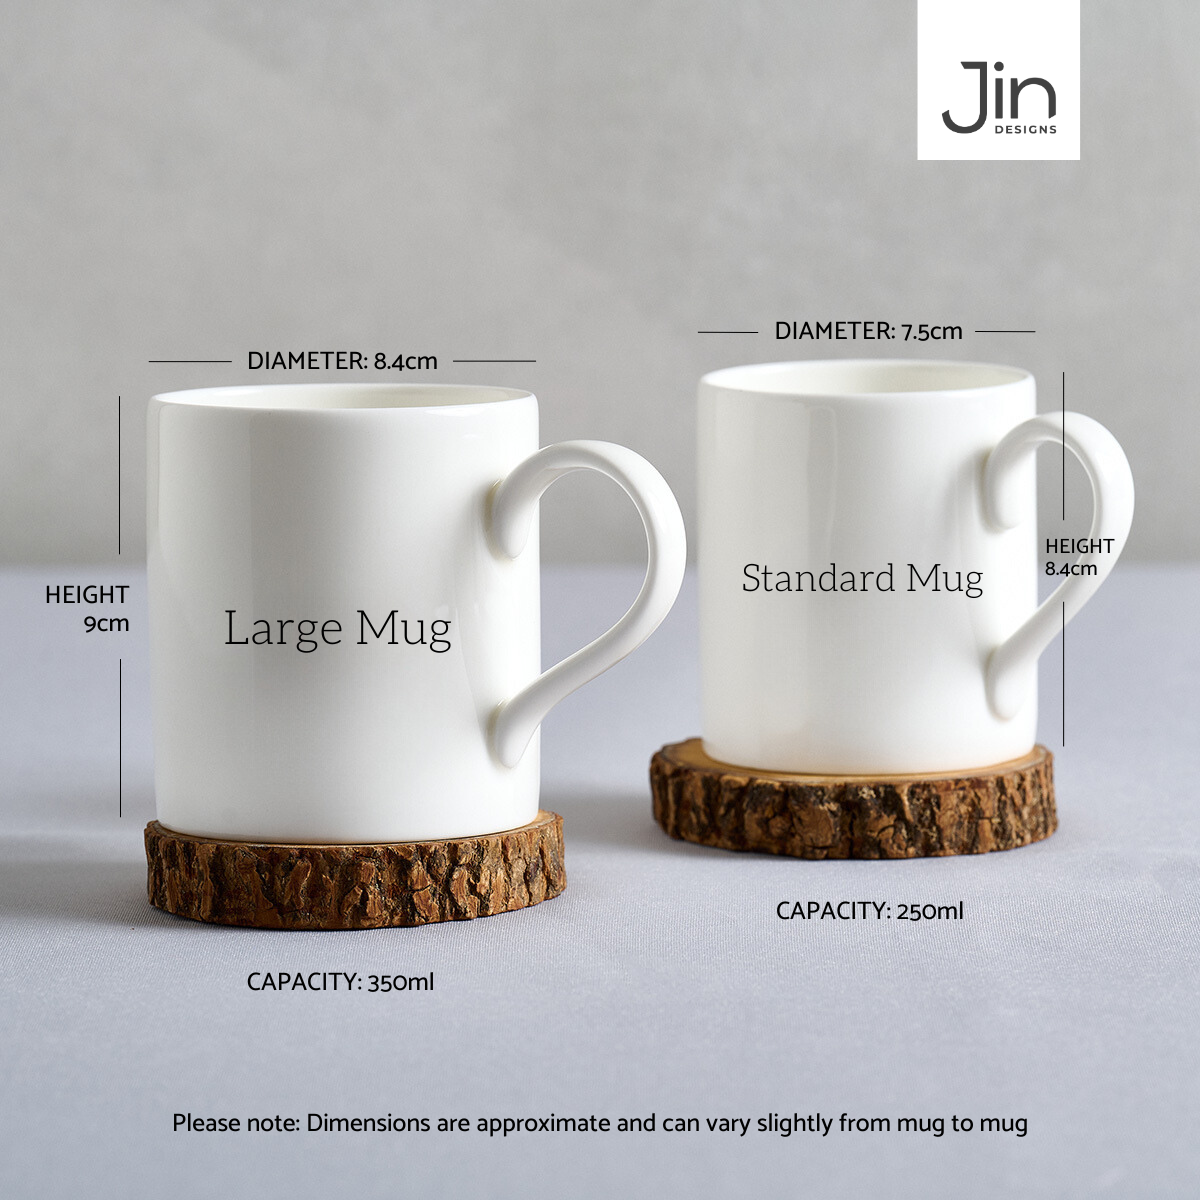 Jin Designs Large and Standard Mug Size